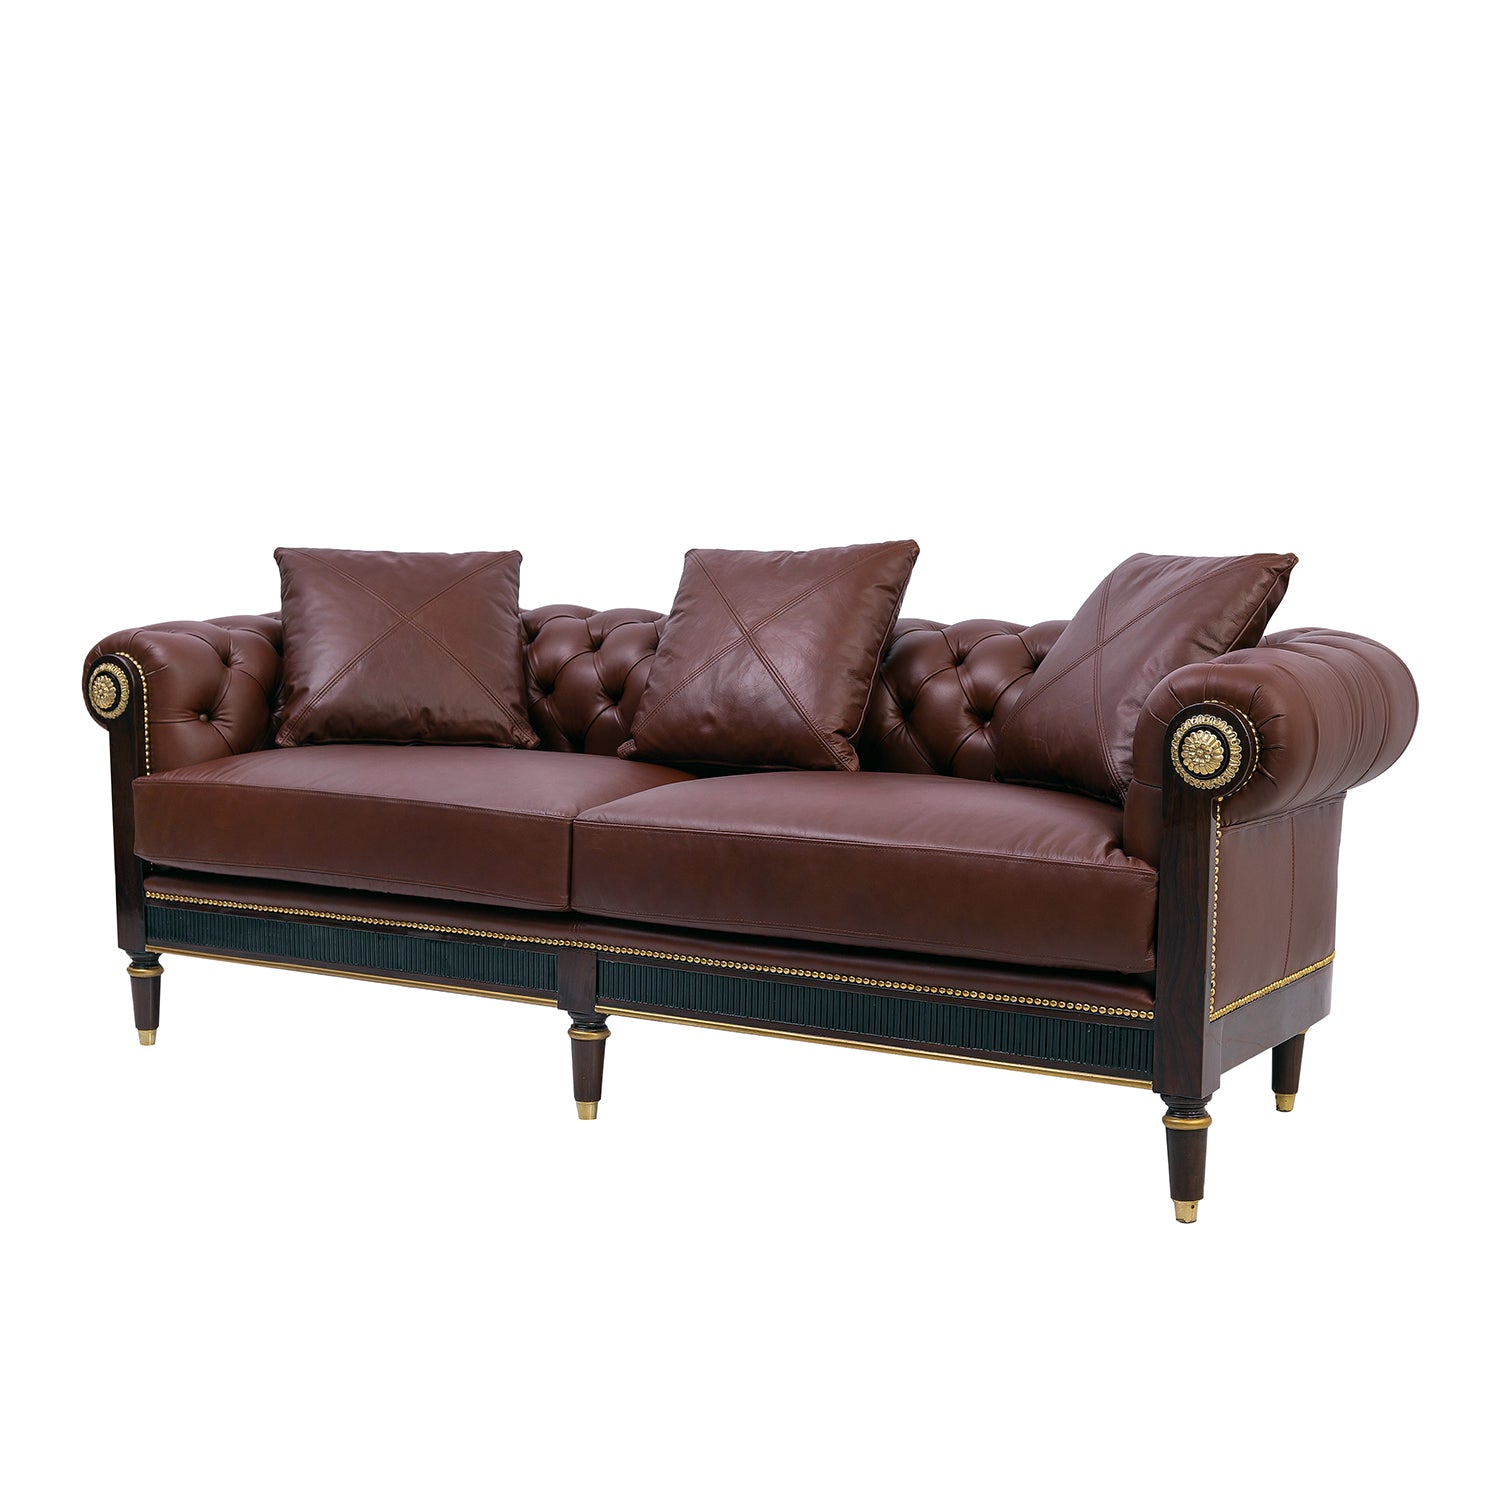 Oscar Marina Leather Sofa Brown Angle